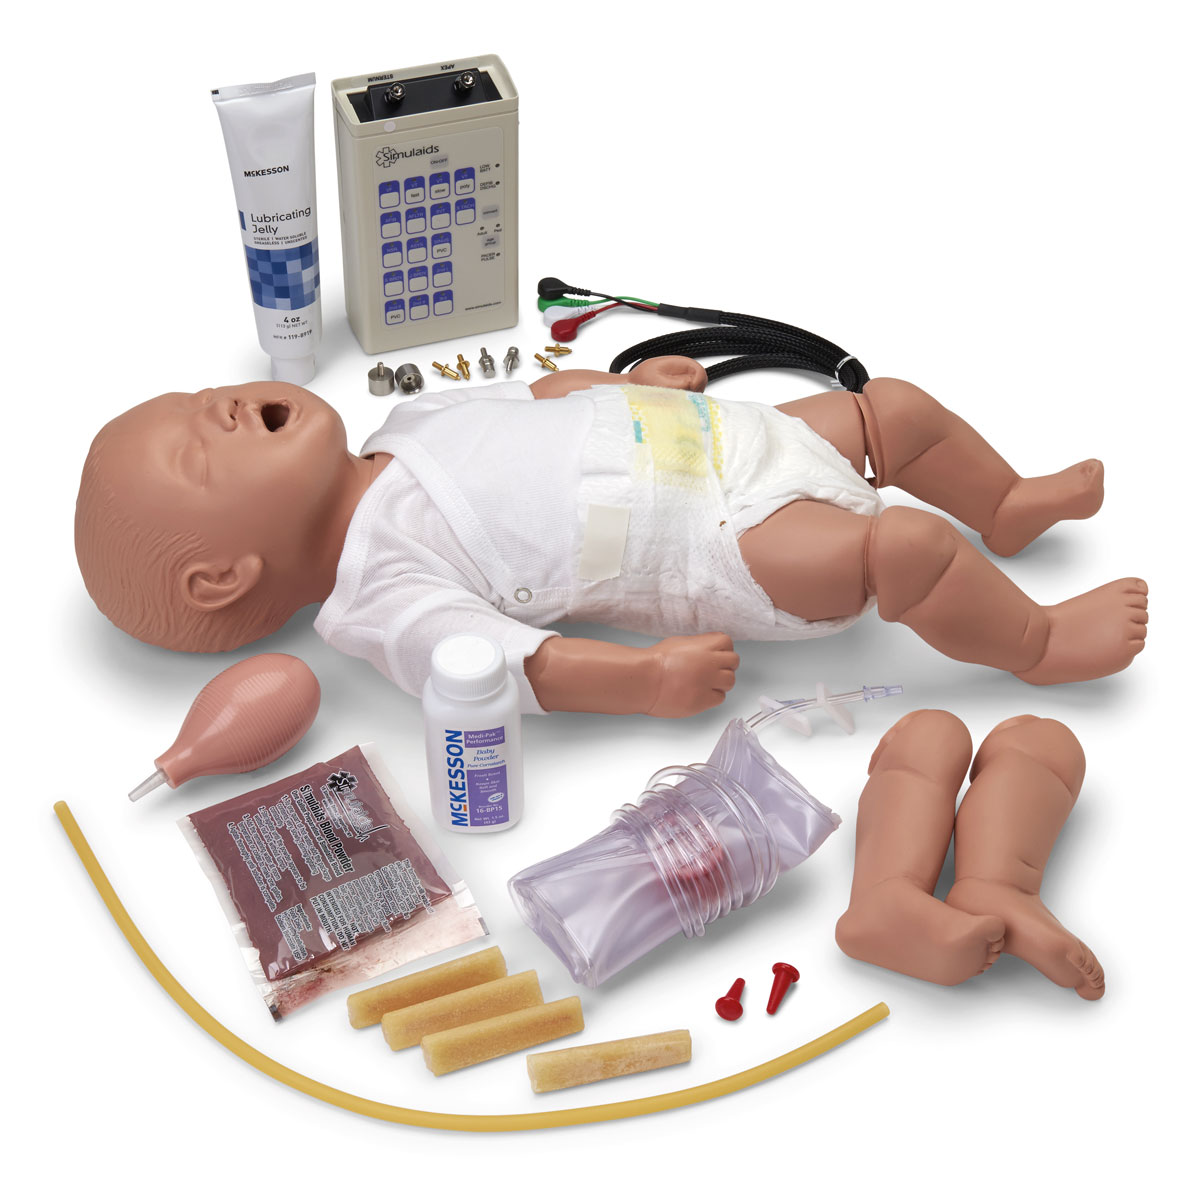 Reanimationspuppe mit EKG-Simulator - 1005759 - W44608 - Simulaids -  101-091U / PP00091U / SB32199U - ALS Neugeborene - 3B Scientific